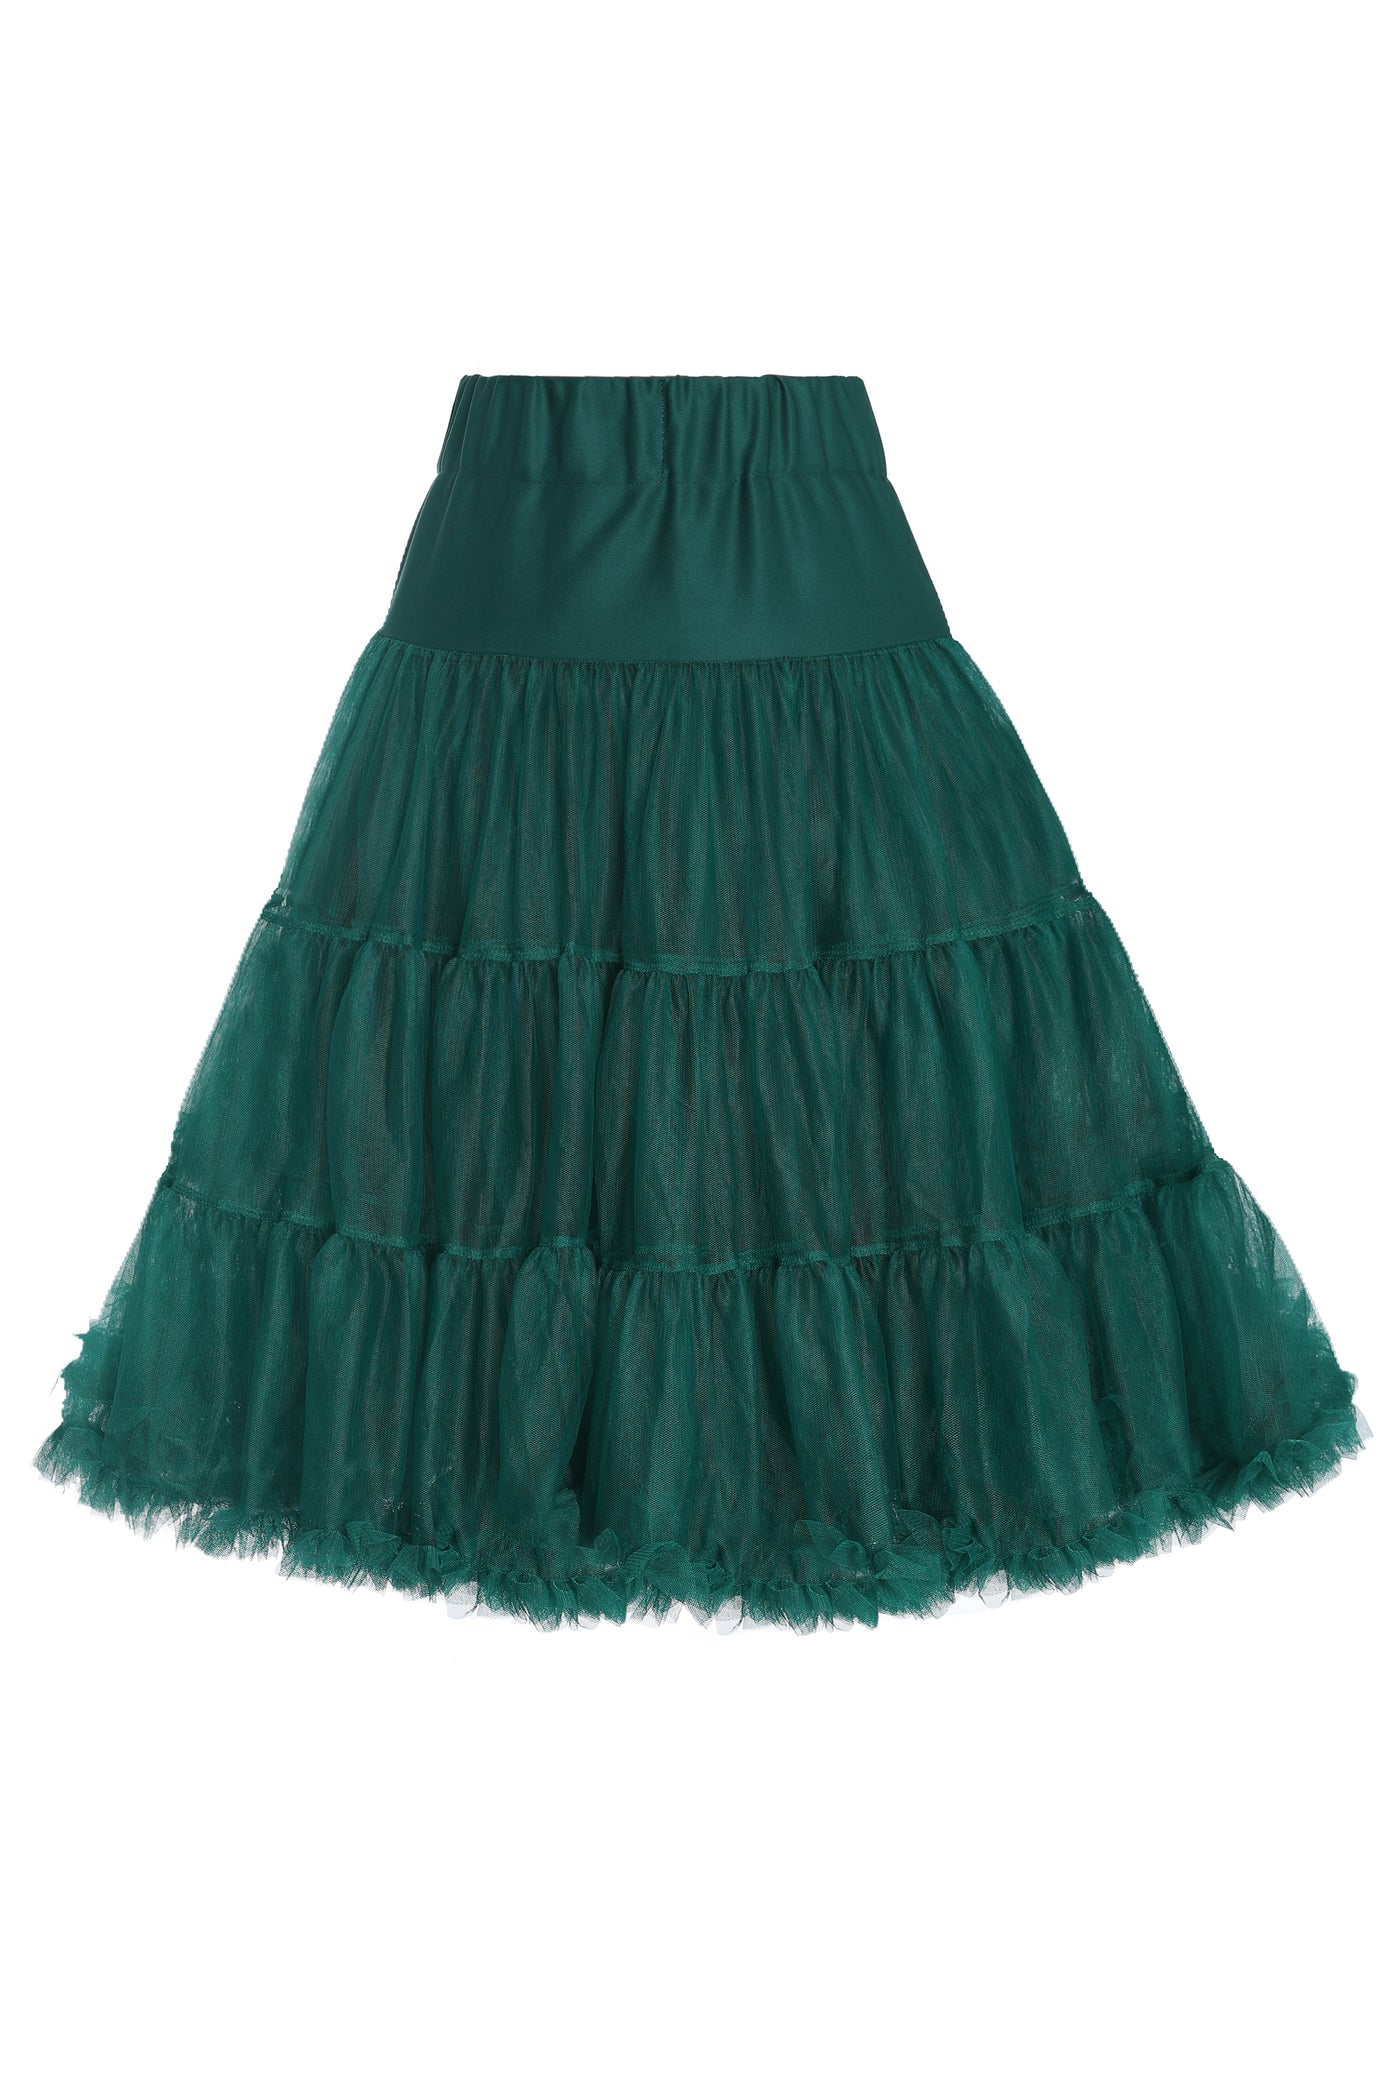 Fluffy Emerald Green Petticoat